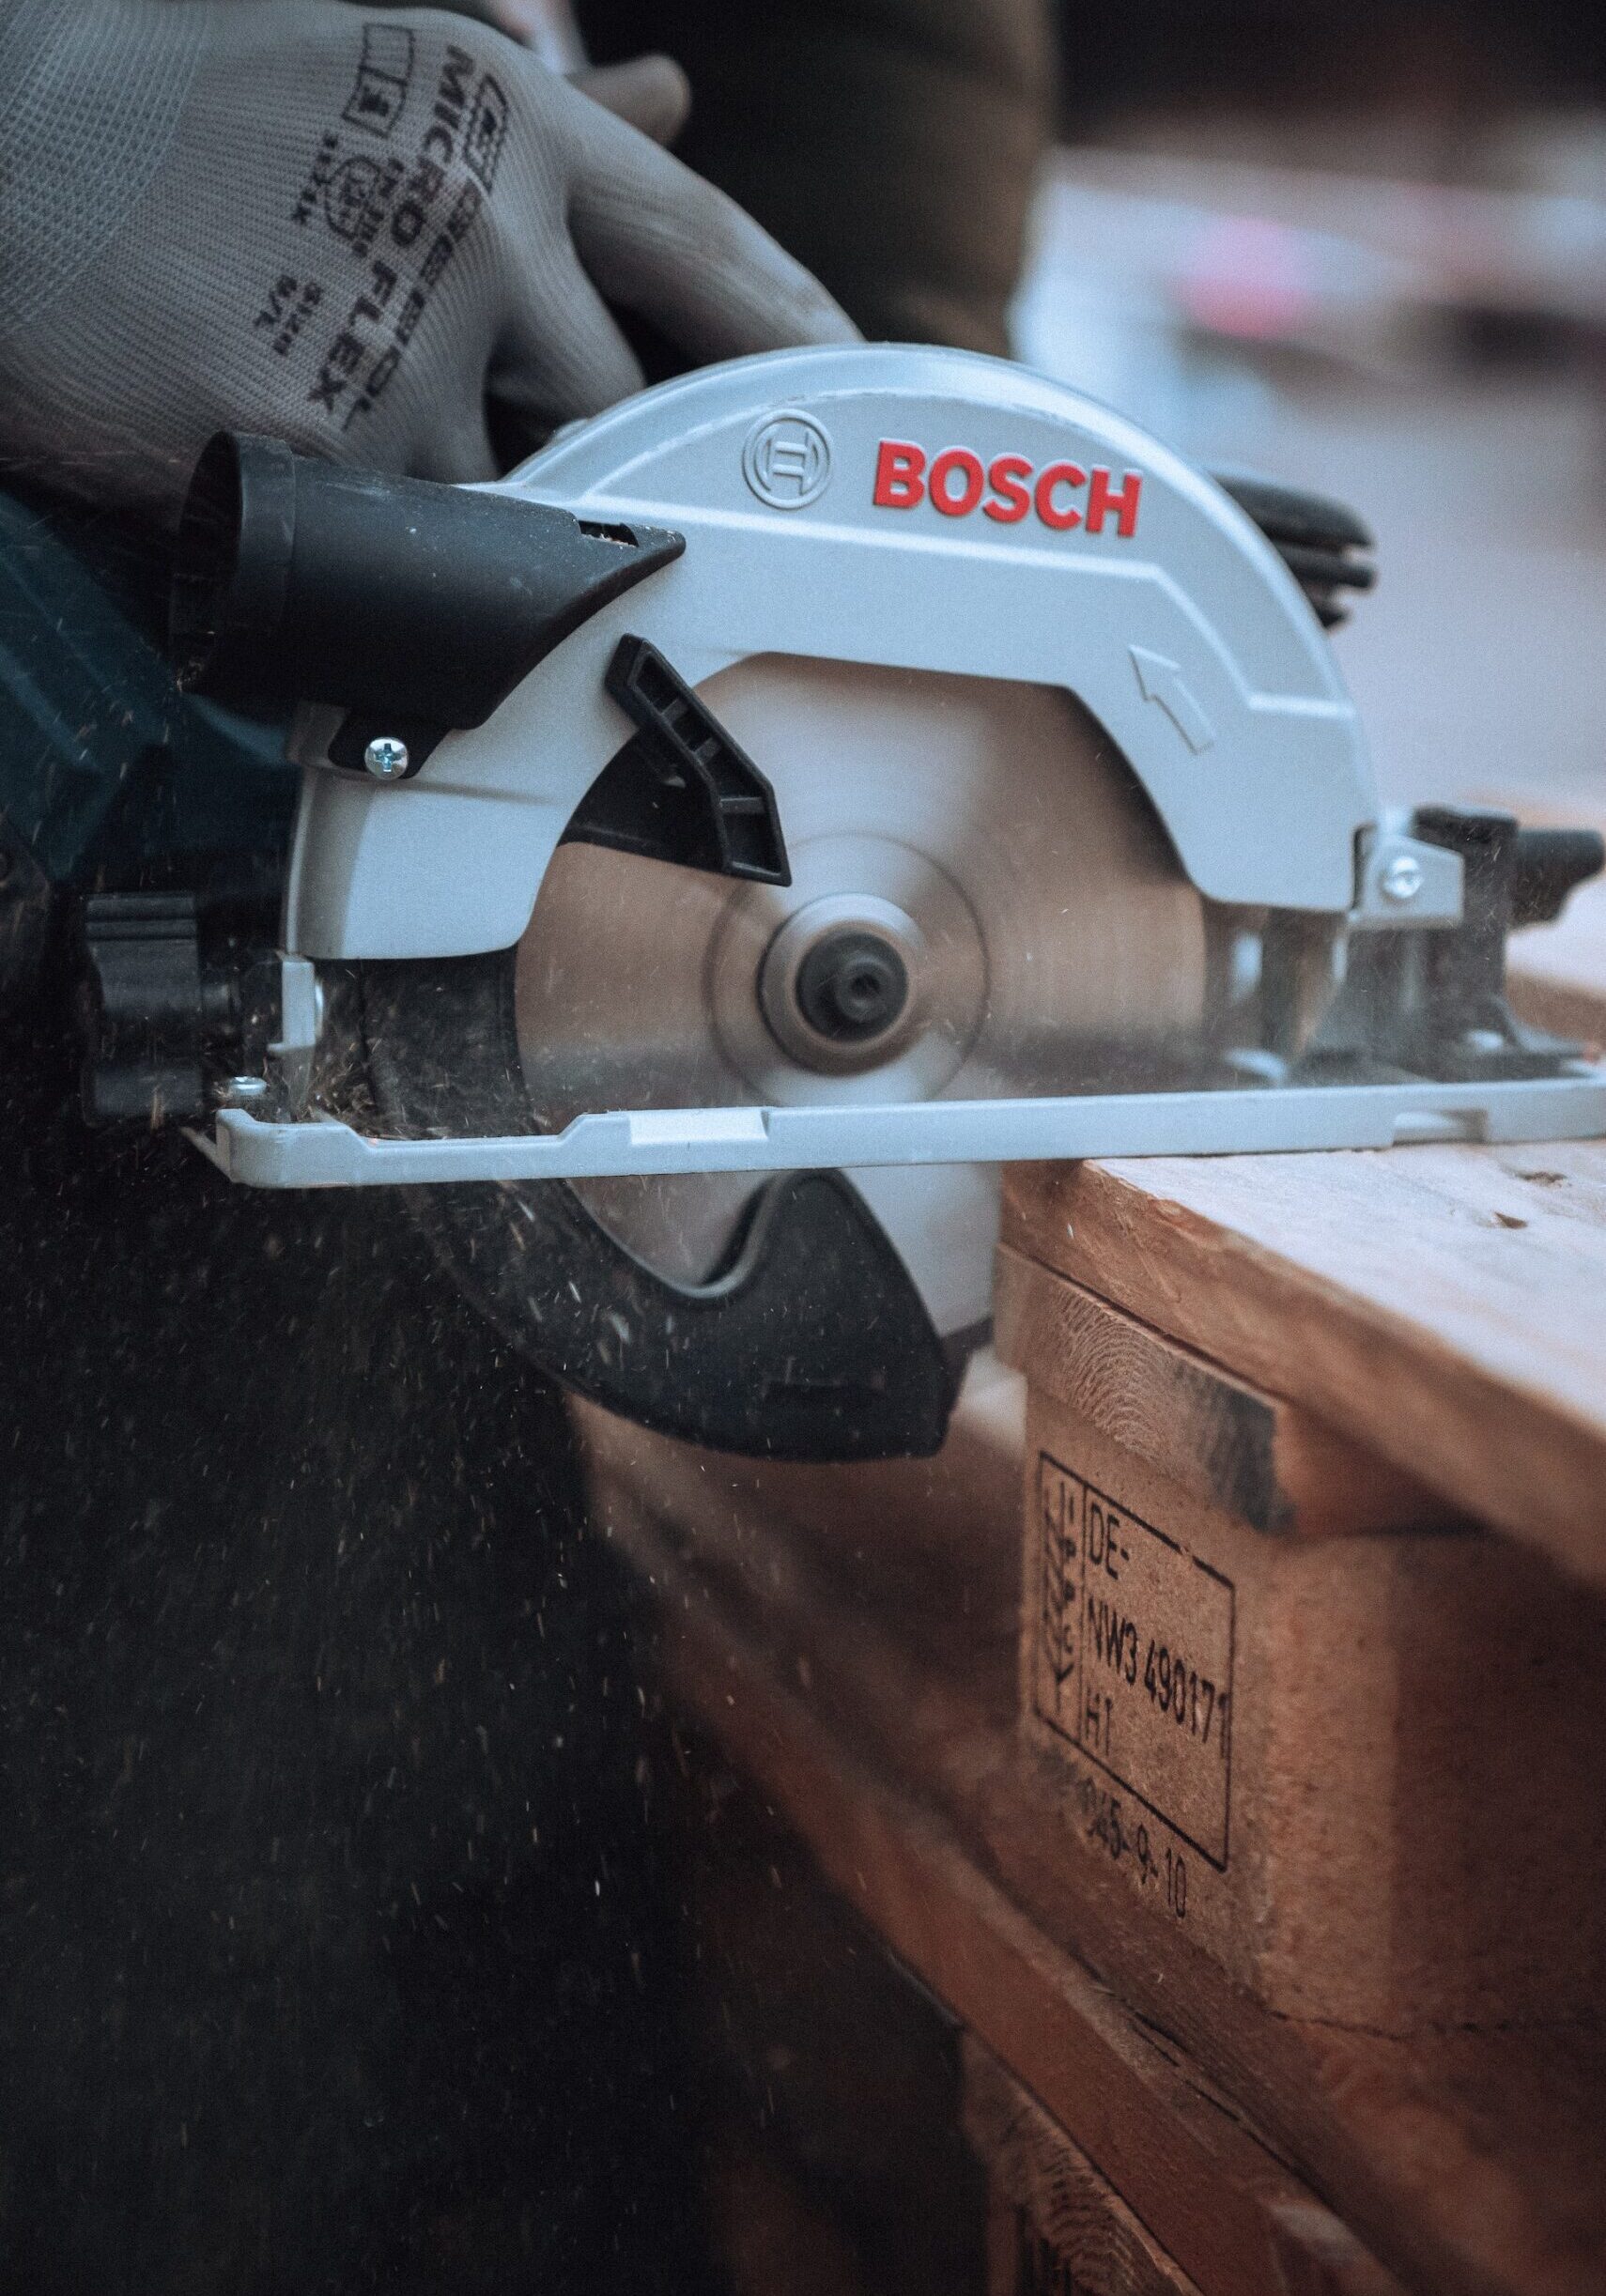 A construction worker using a bosch saw